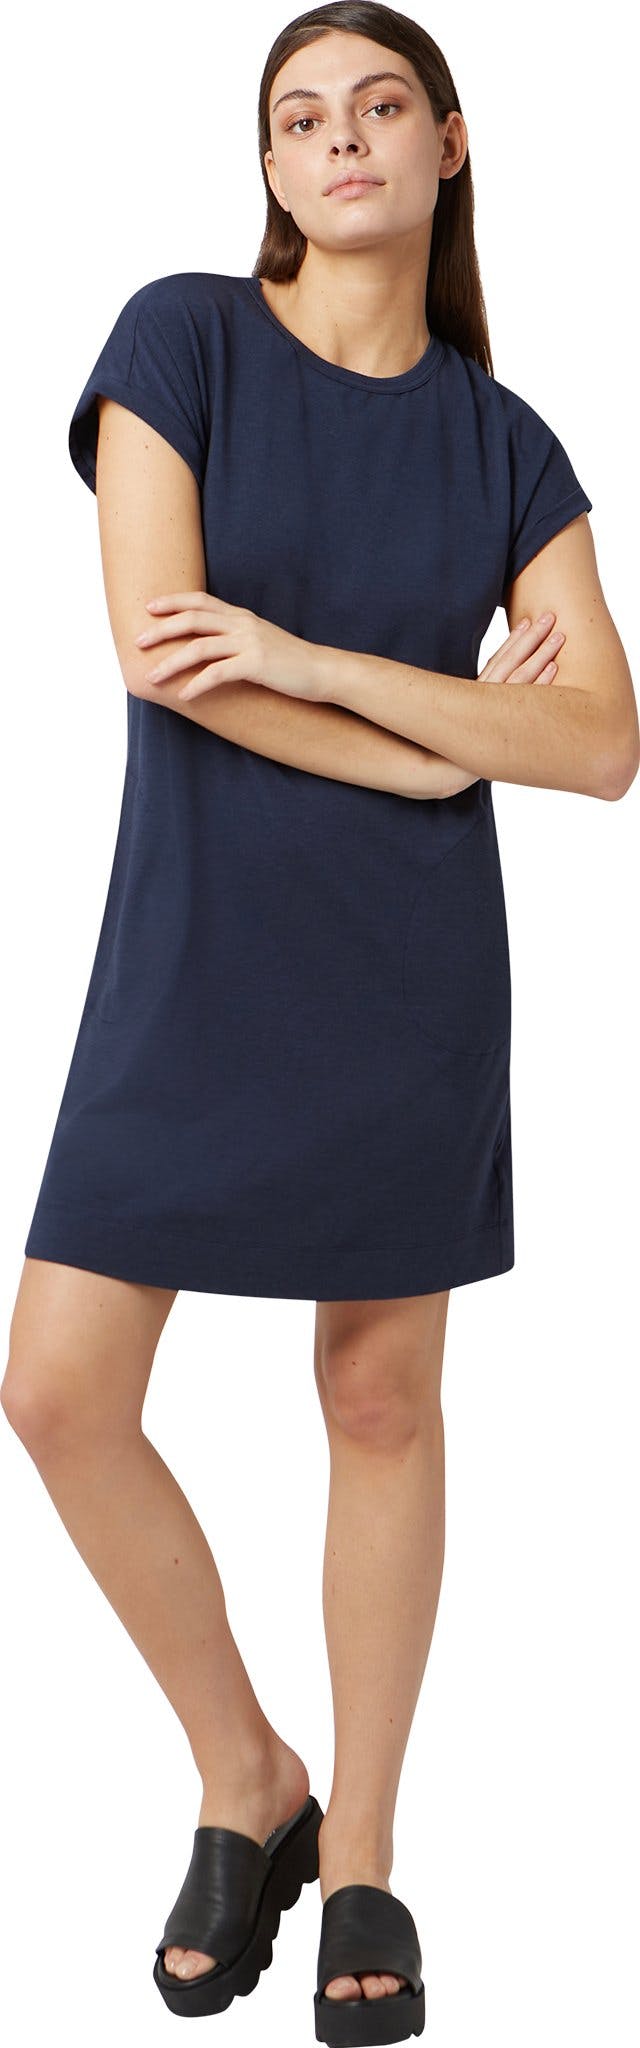 Product image for Altona Dress - Women's